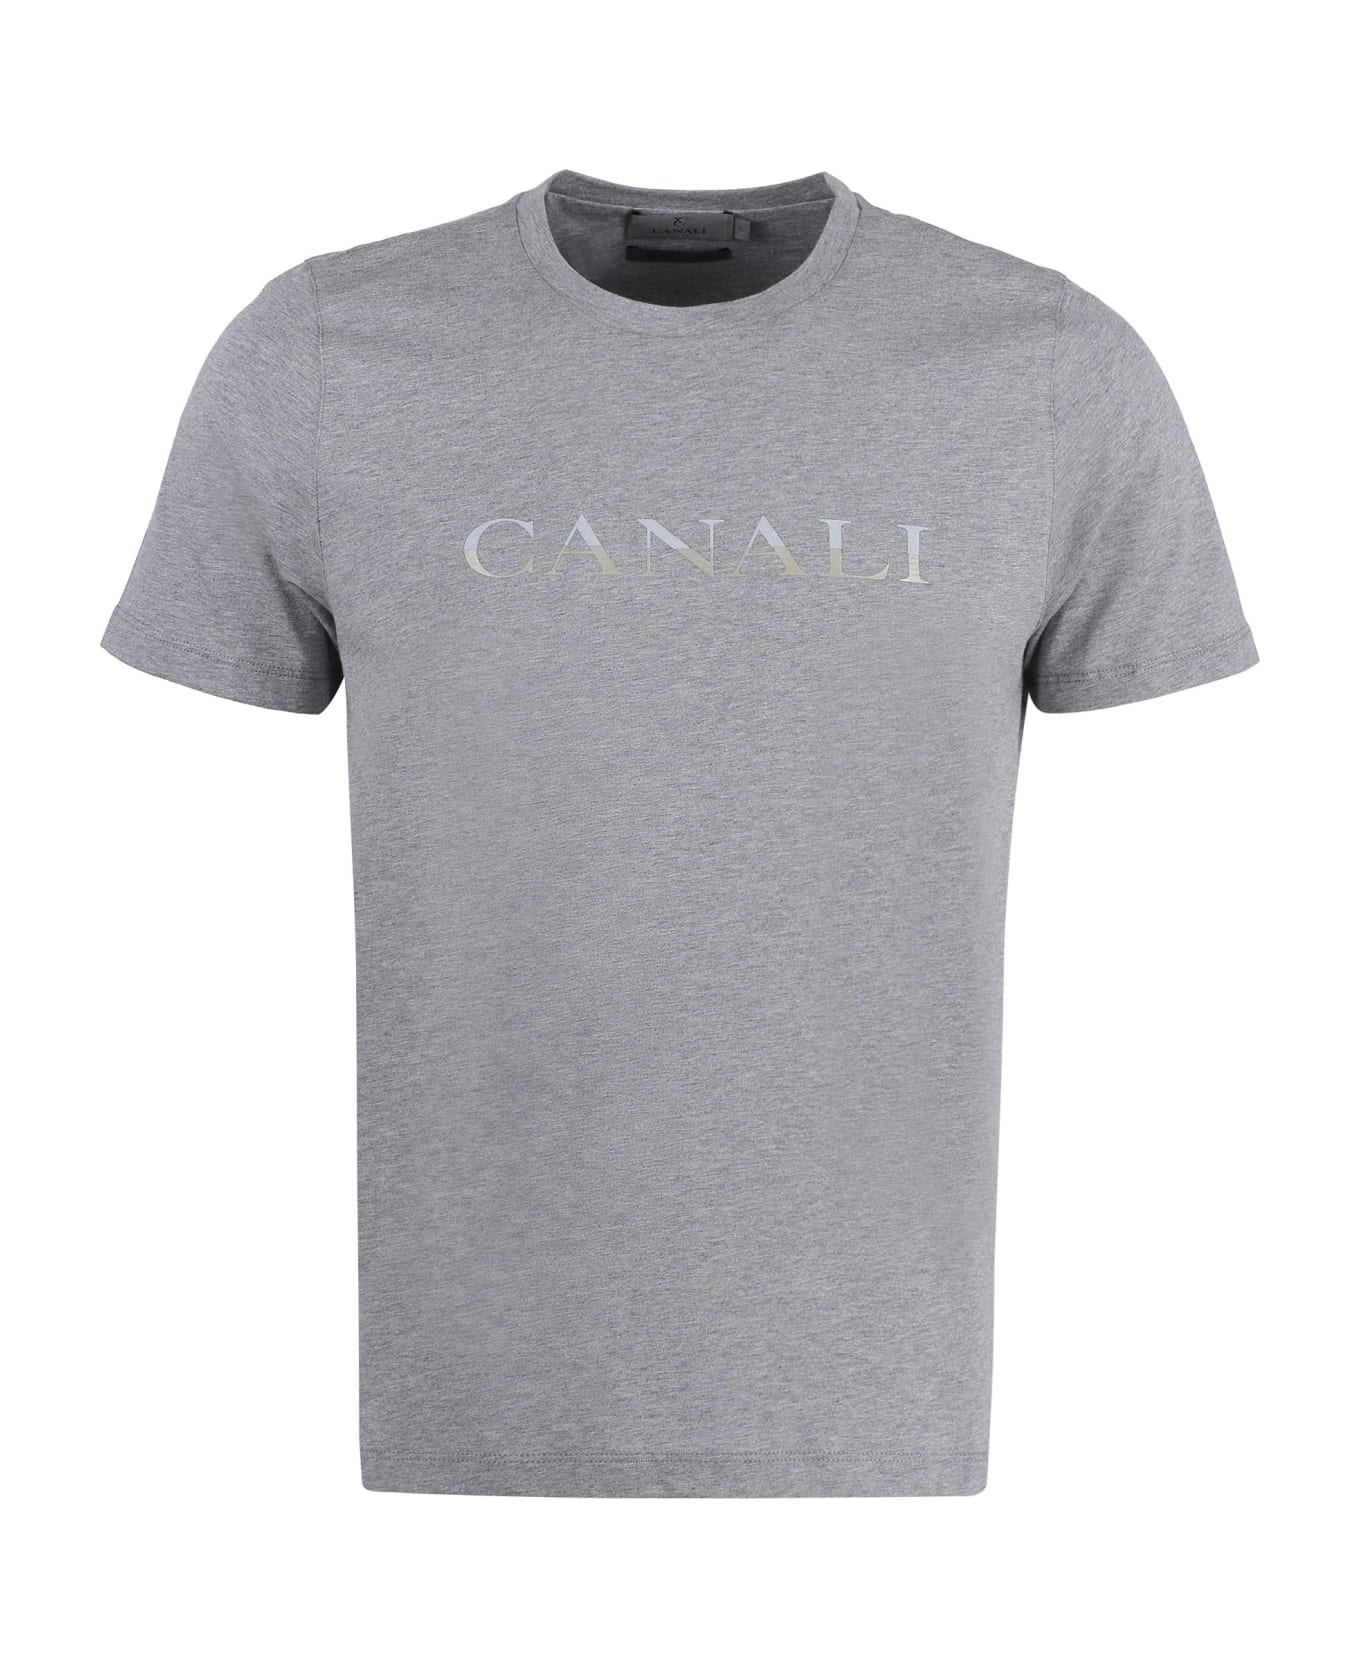 Canali Cotton T-shirt - grey シャツ